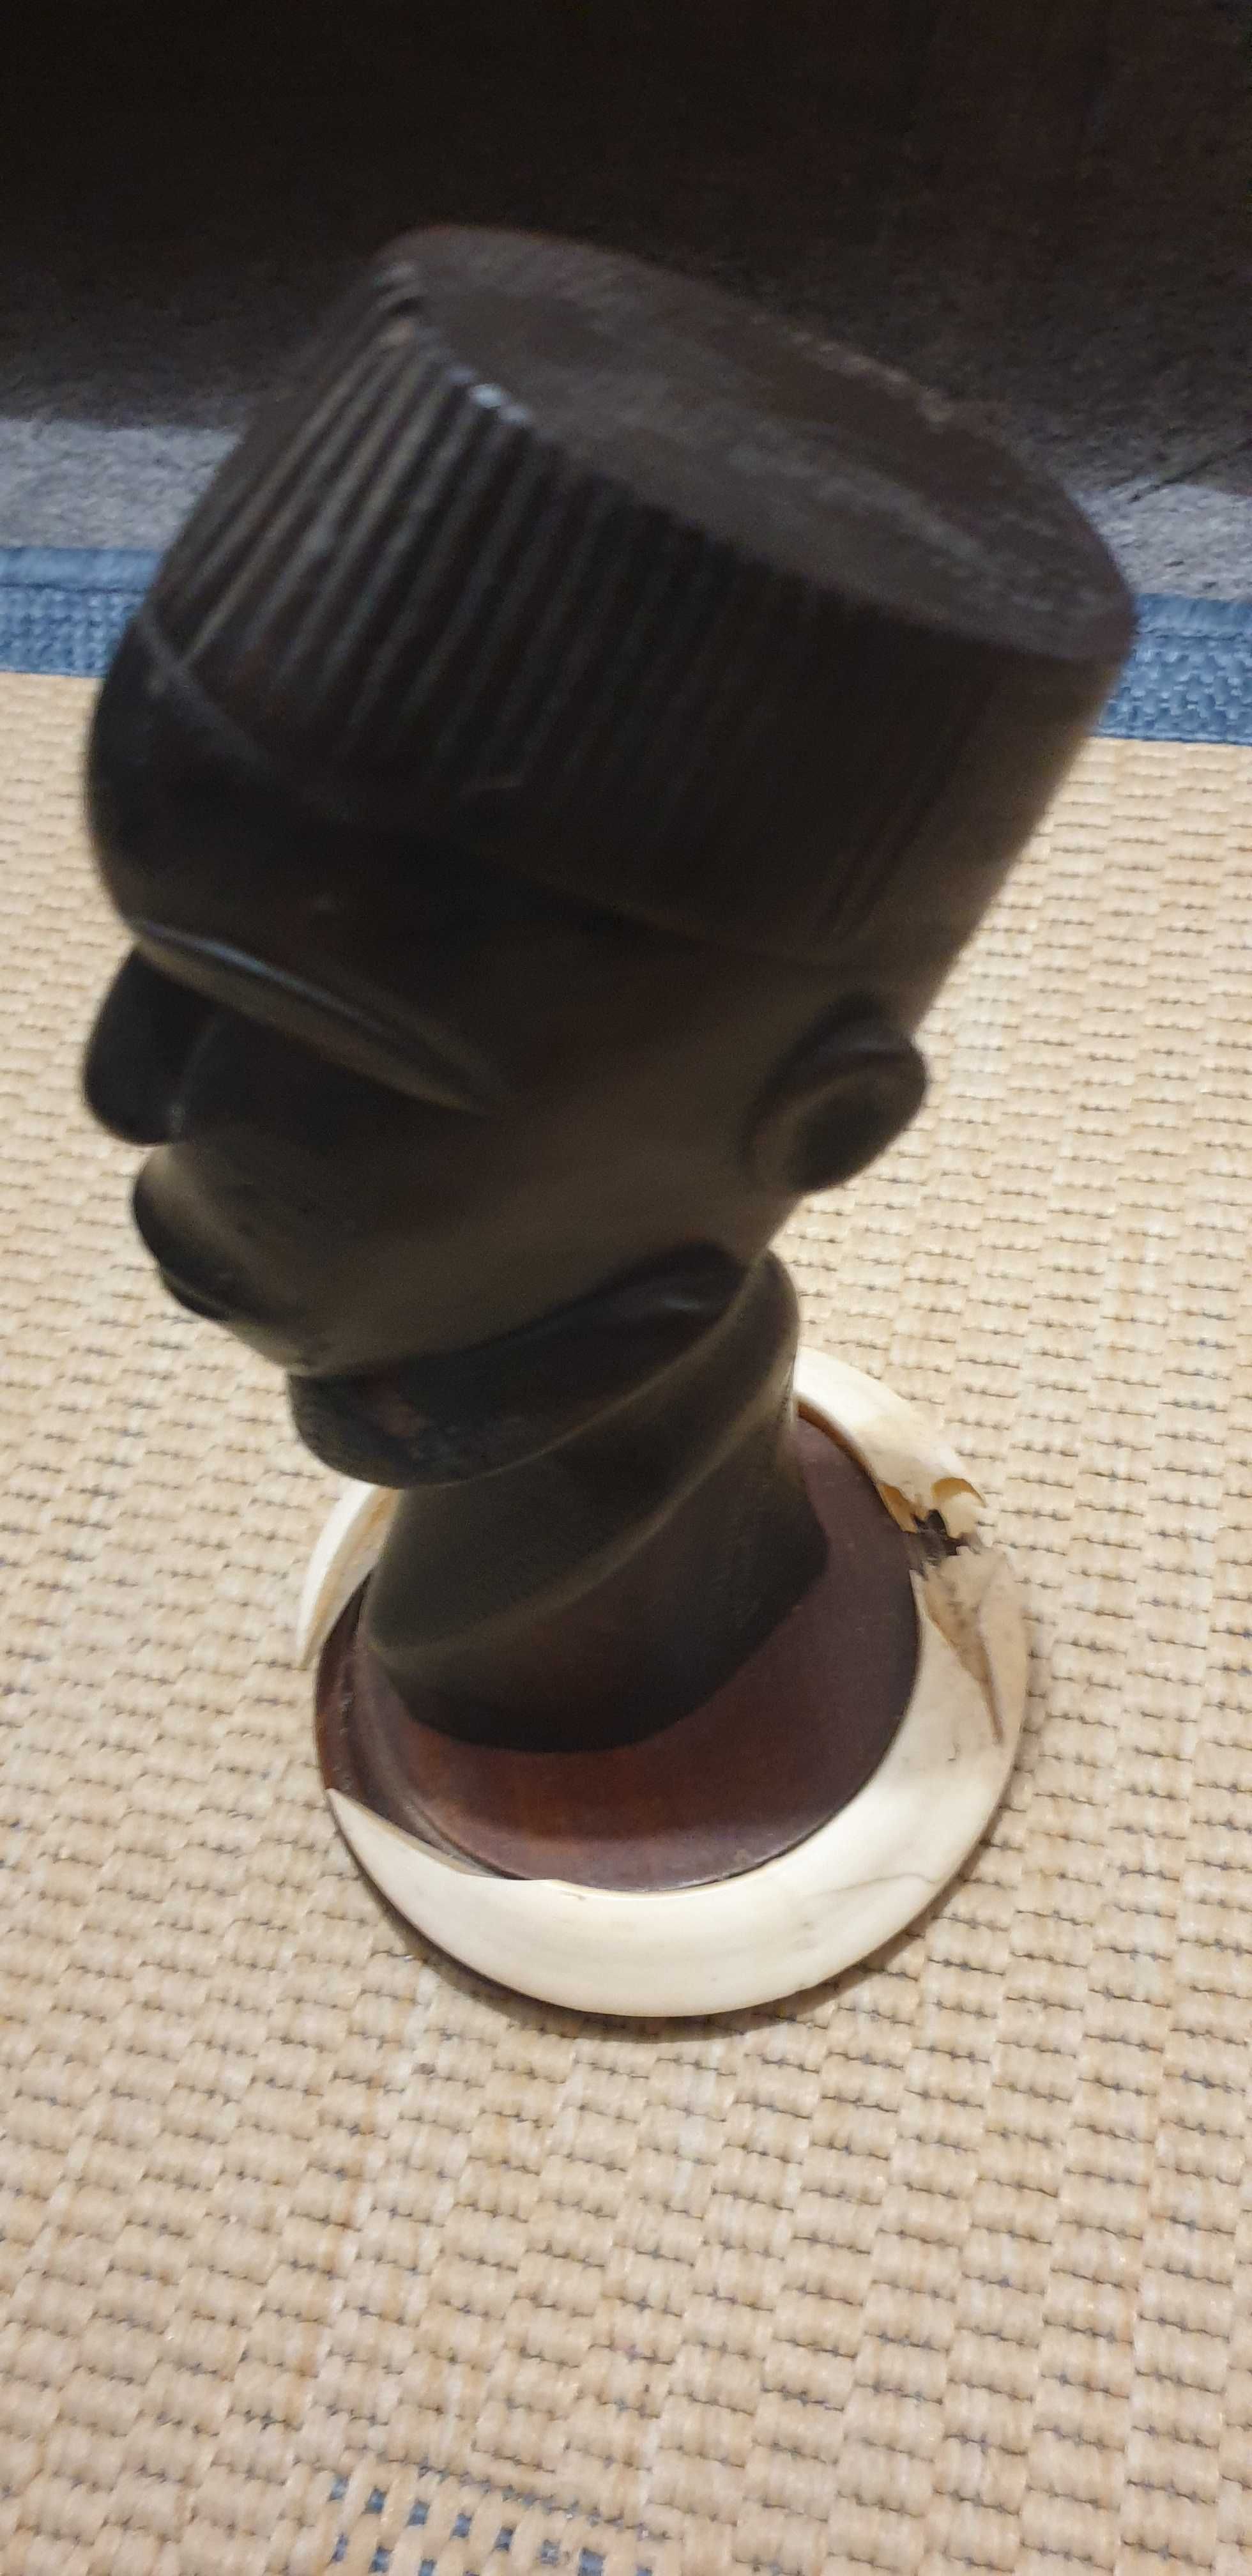 Busto africano vintage